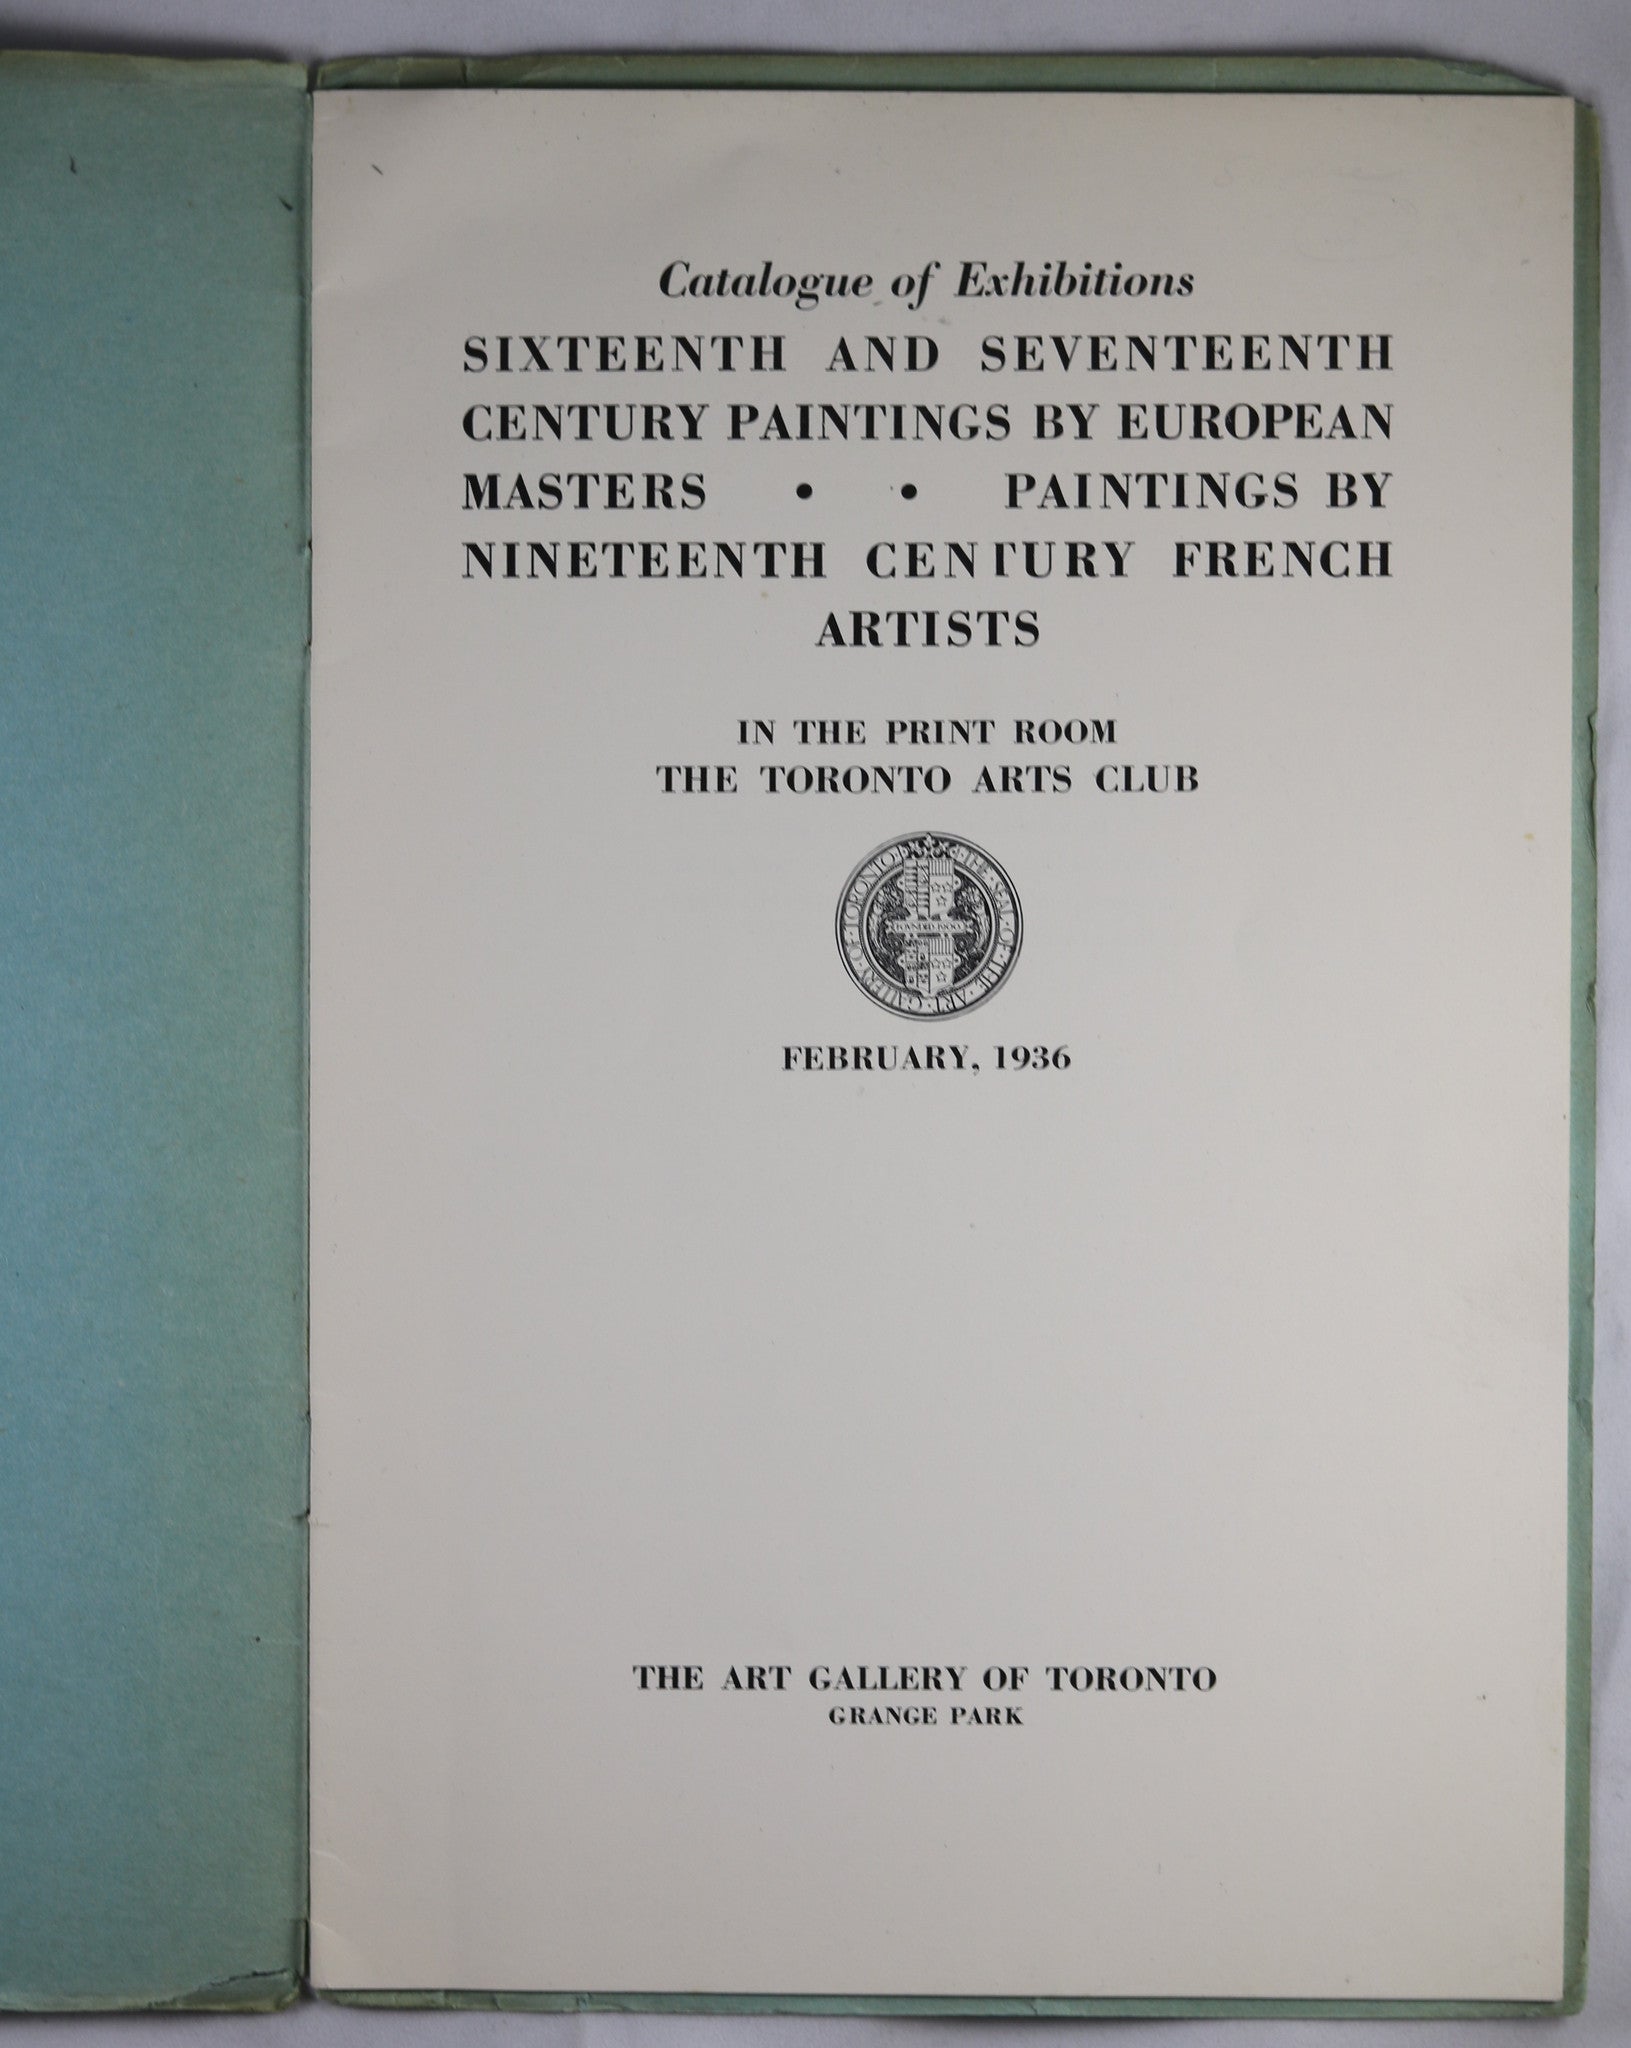 1936 Catalogue of Exhibitions AGO Print Room - Toronto Arts Club